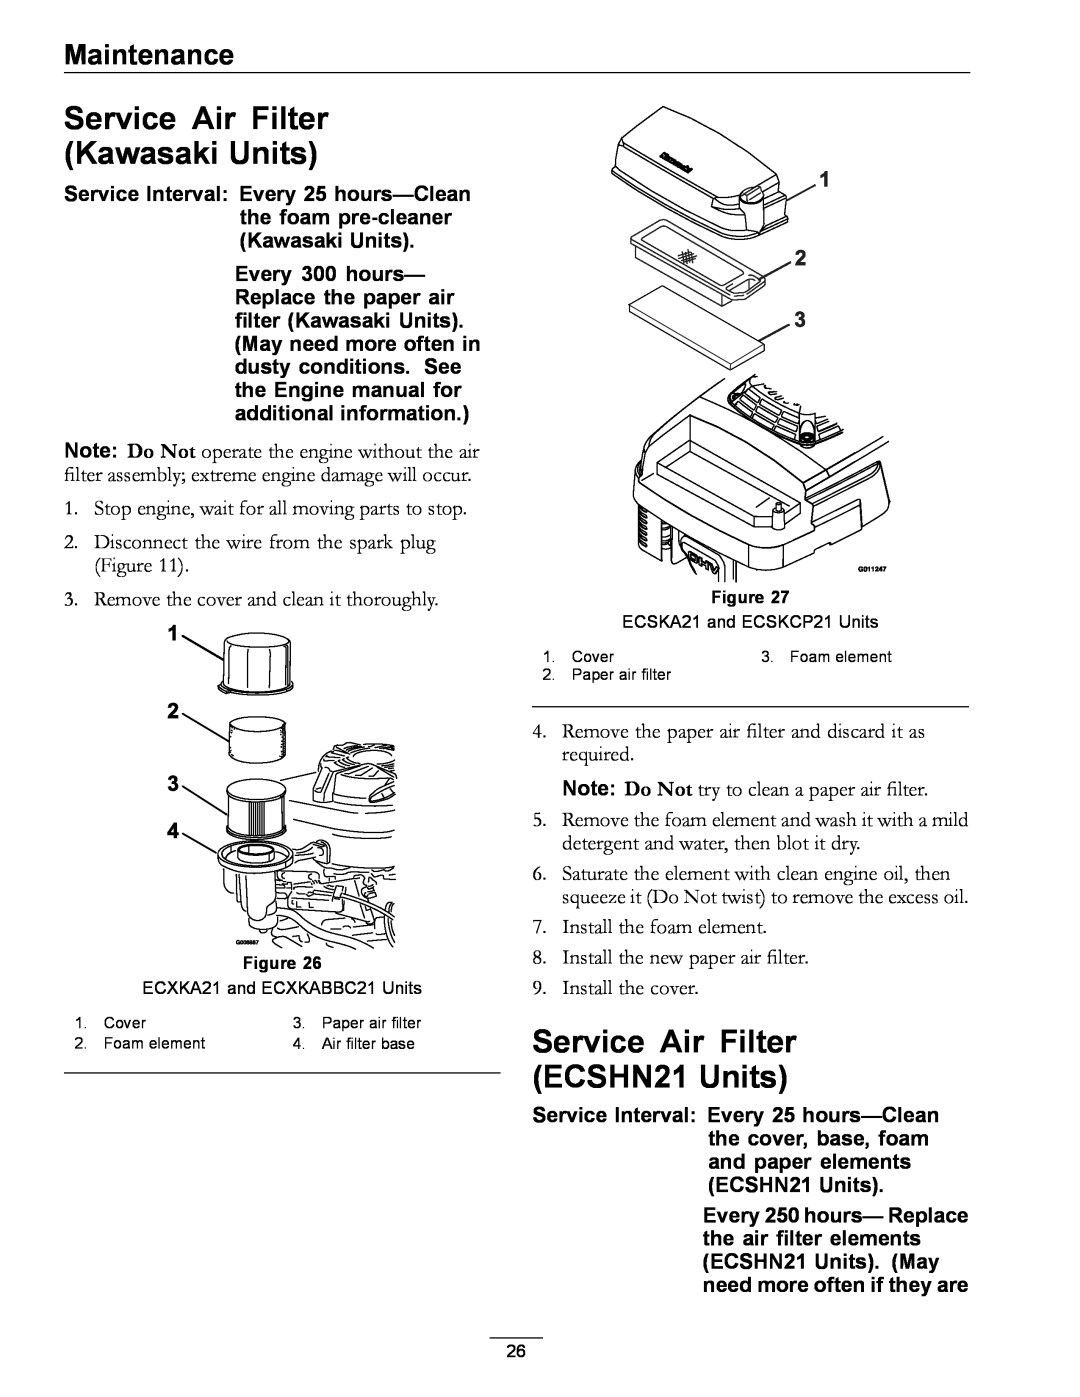 Exmark 4500-686 Rev. B manual Service Air Filter Kawasaki Units, Service Air Filter ECSHN21 Units, Maintenance 